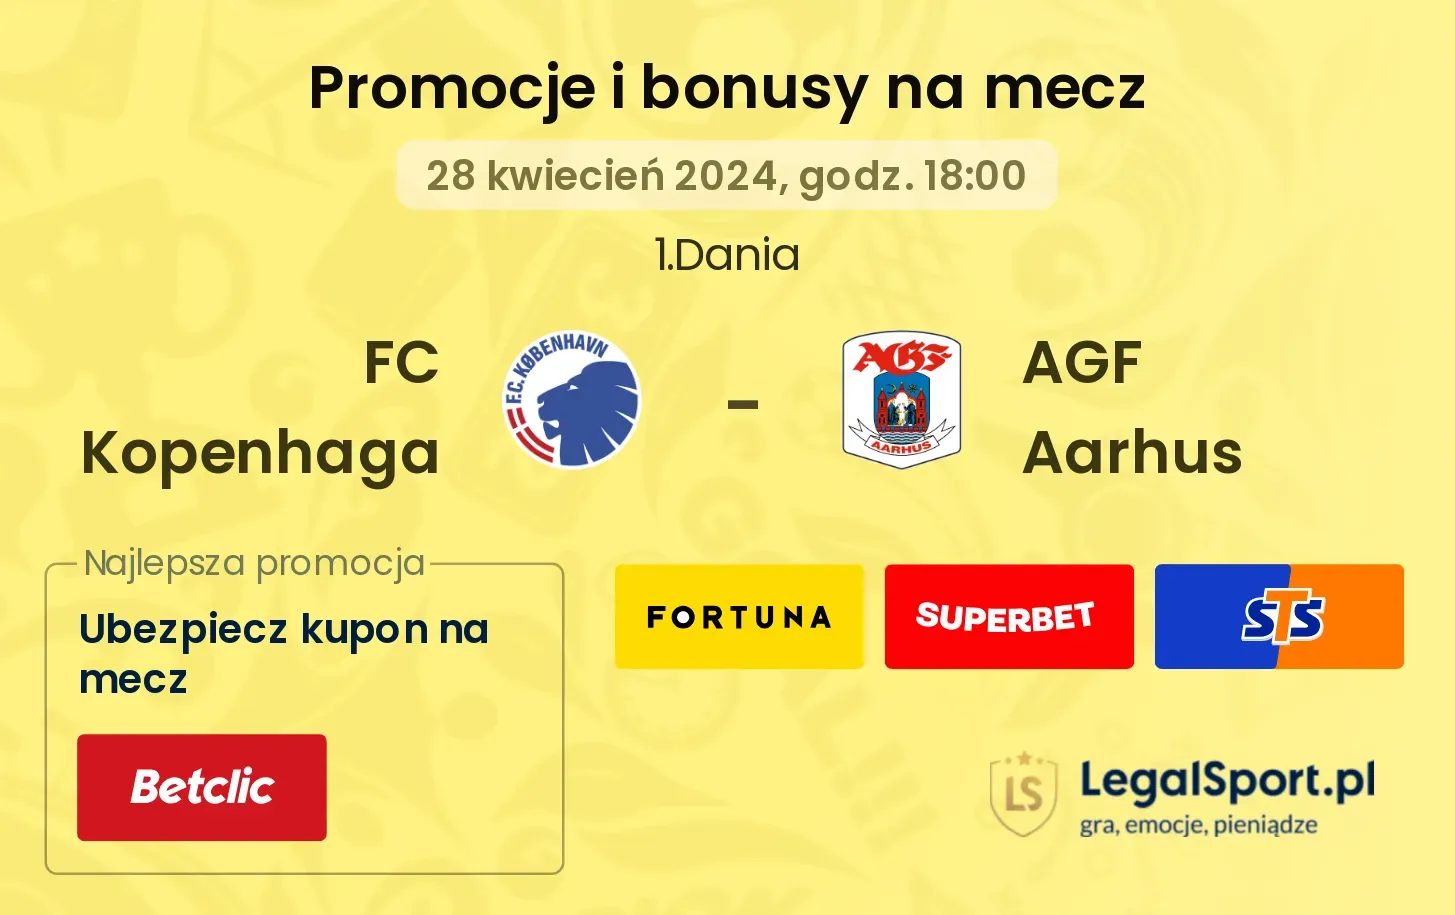 FC Kopenhaga - AGF Aarhus promocje bonusy na mecz